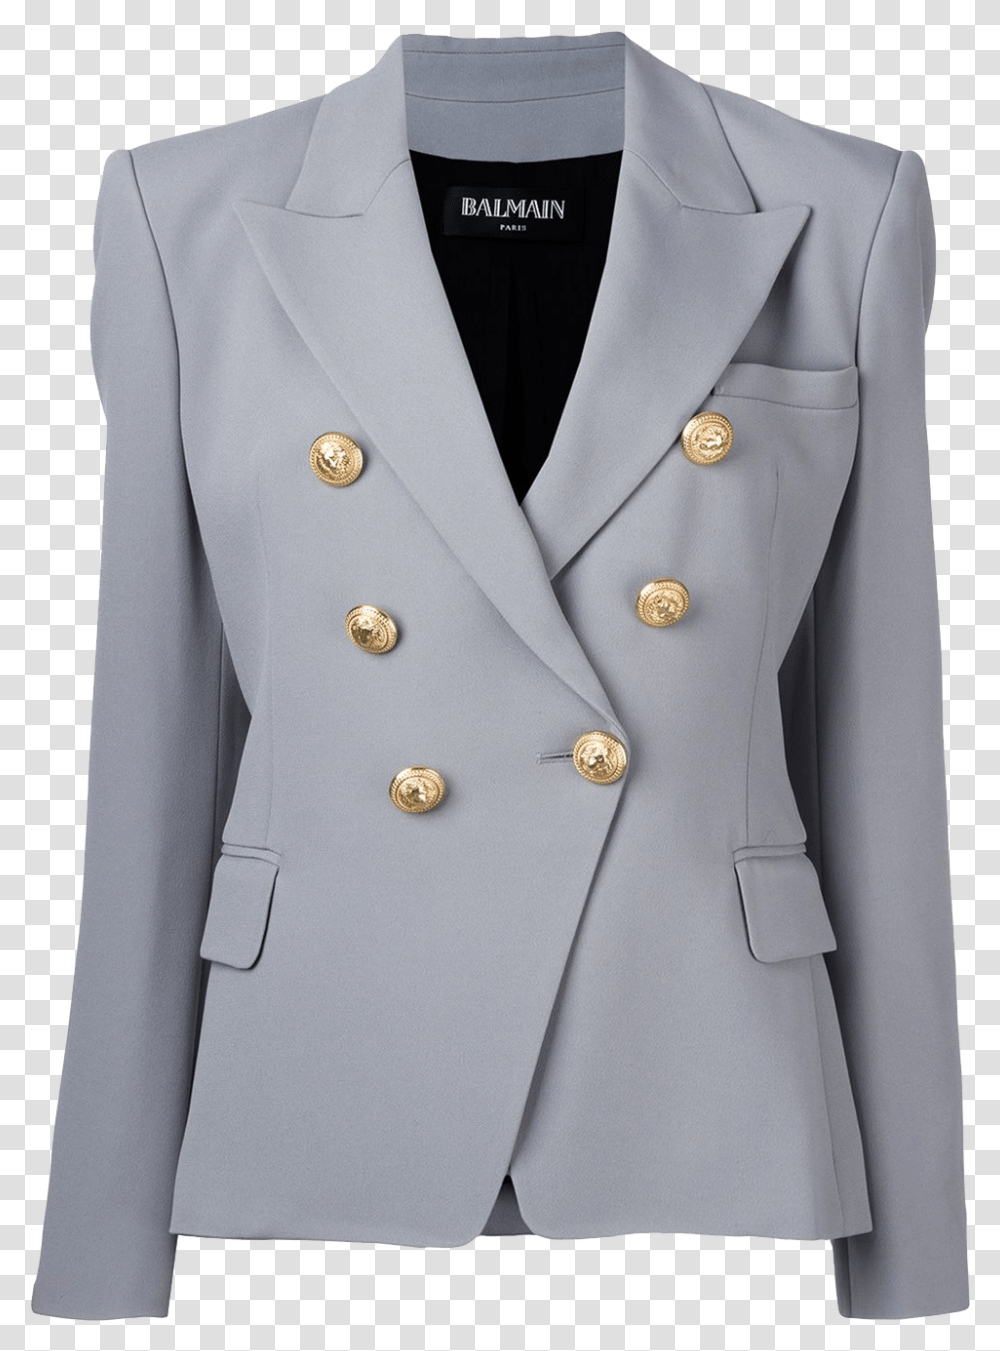 Women Double Breasted Blazer Image File Balmain Jacket Woman, Coat, Apparel, Overcoat Transparent Png